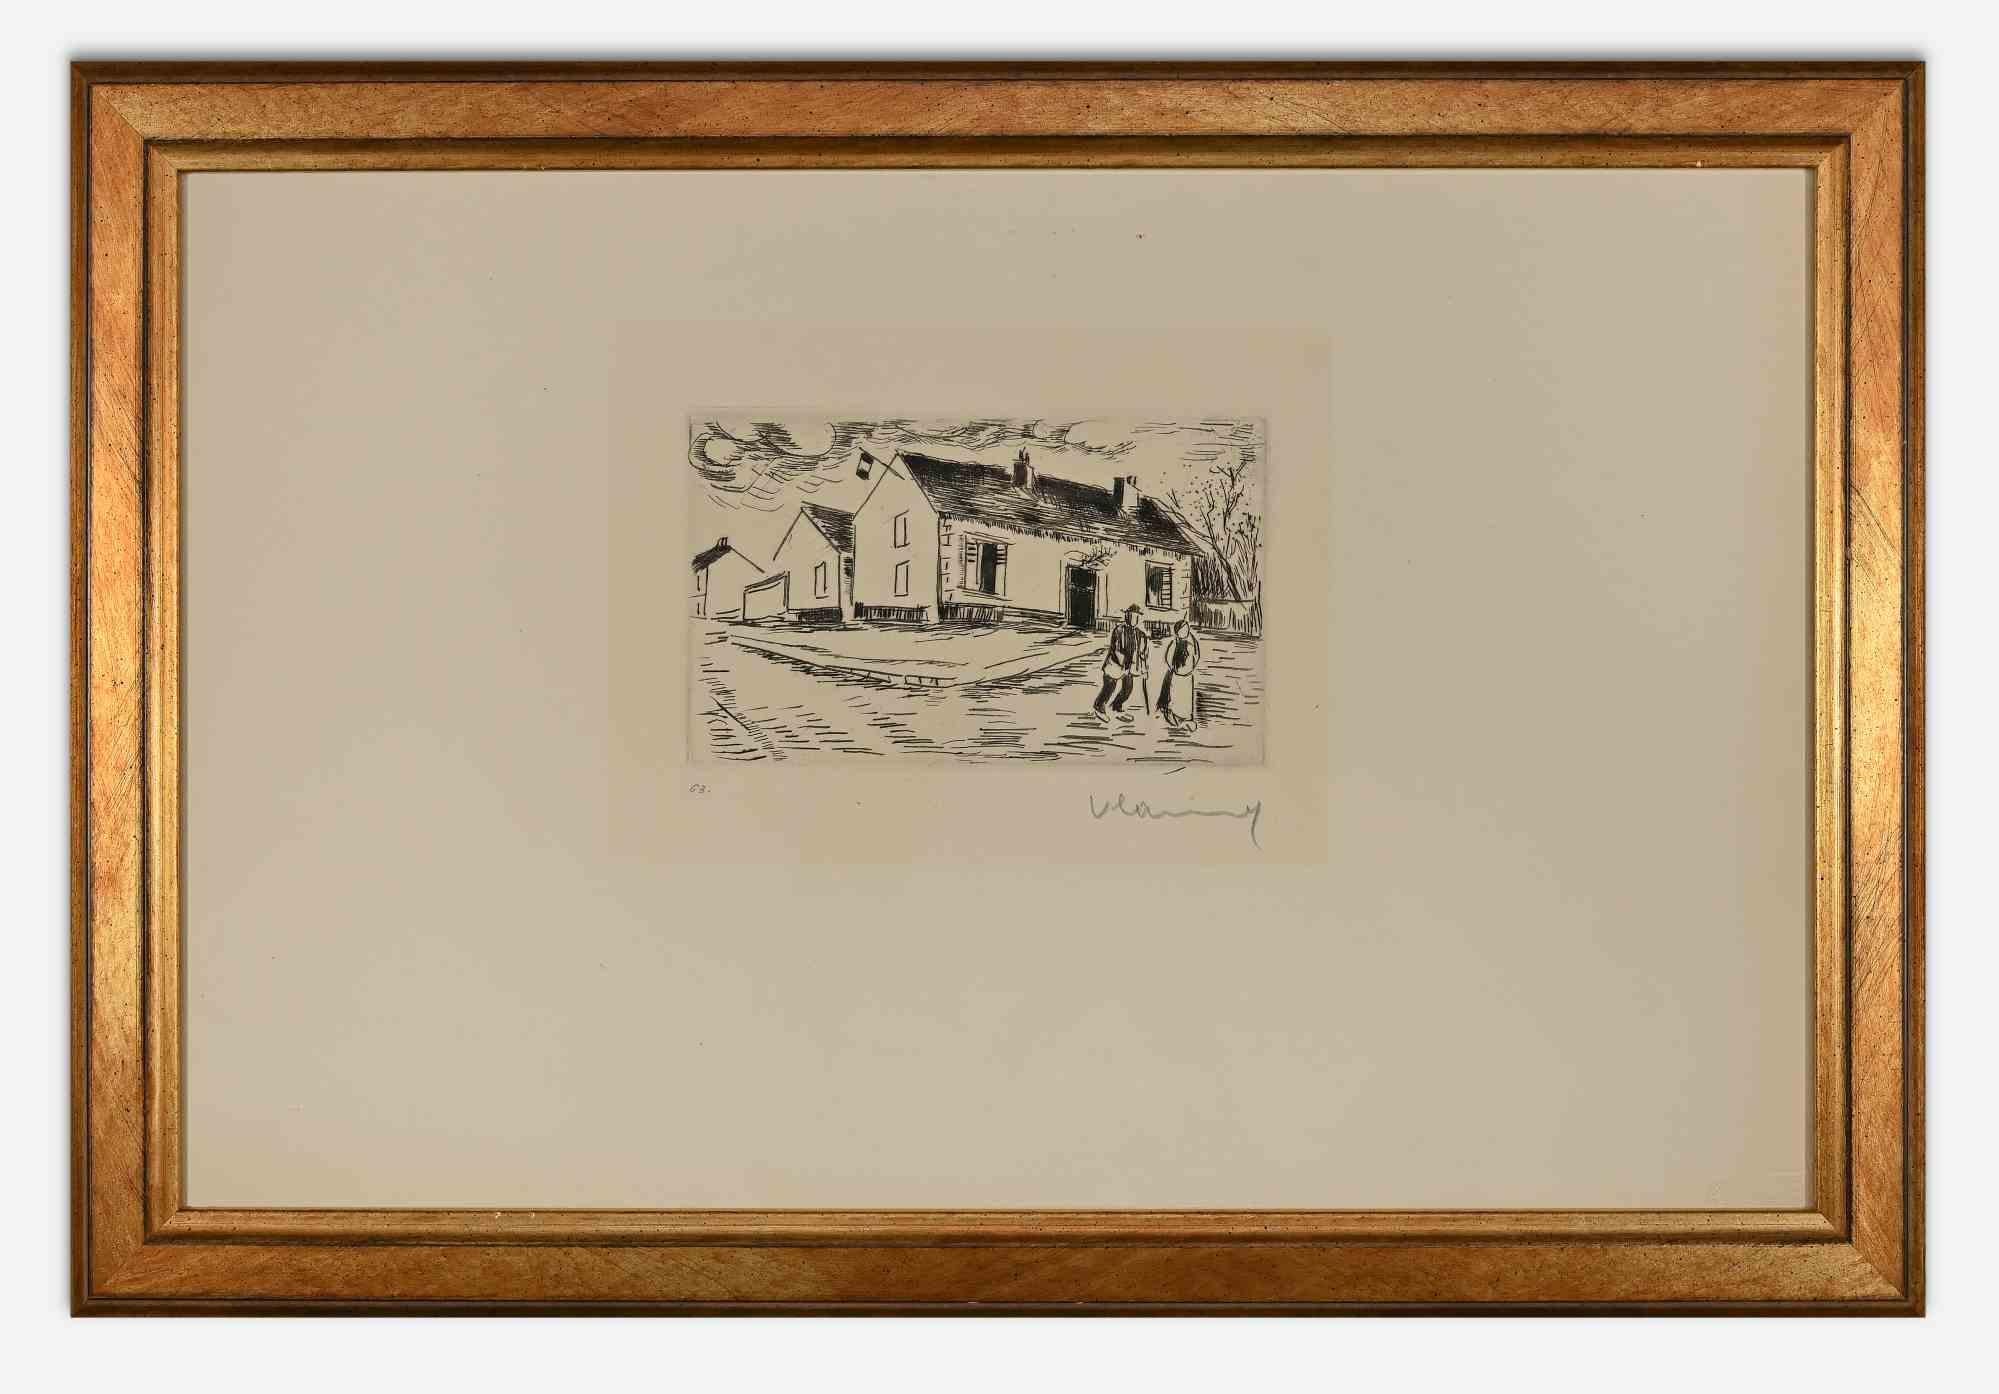 Village - Gravure de M. de Vlaminck - 1950 - Print de Maurice de Vlaminck